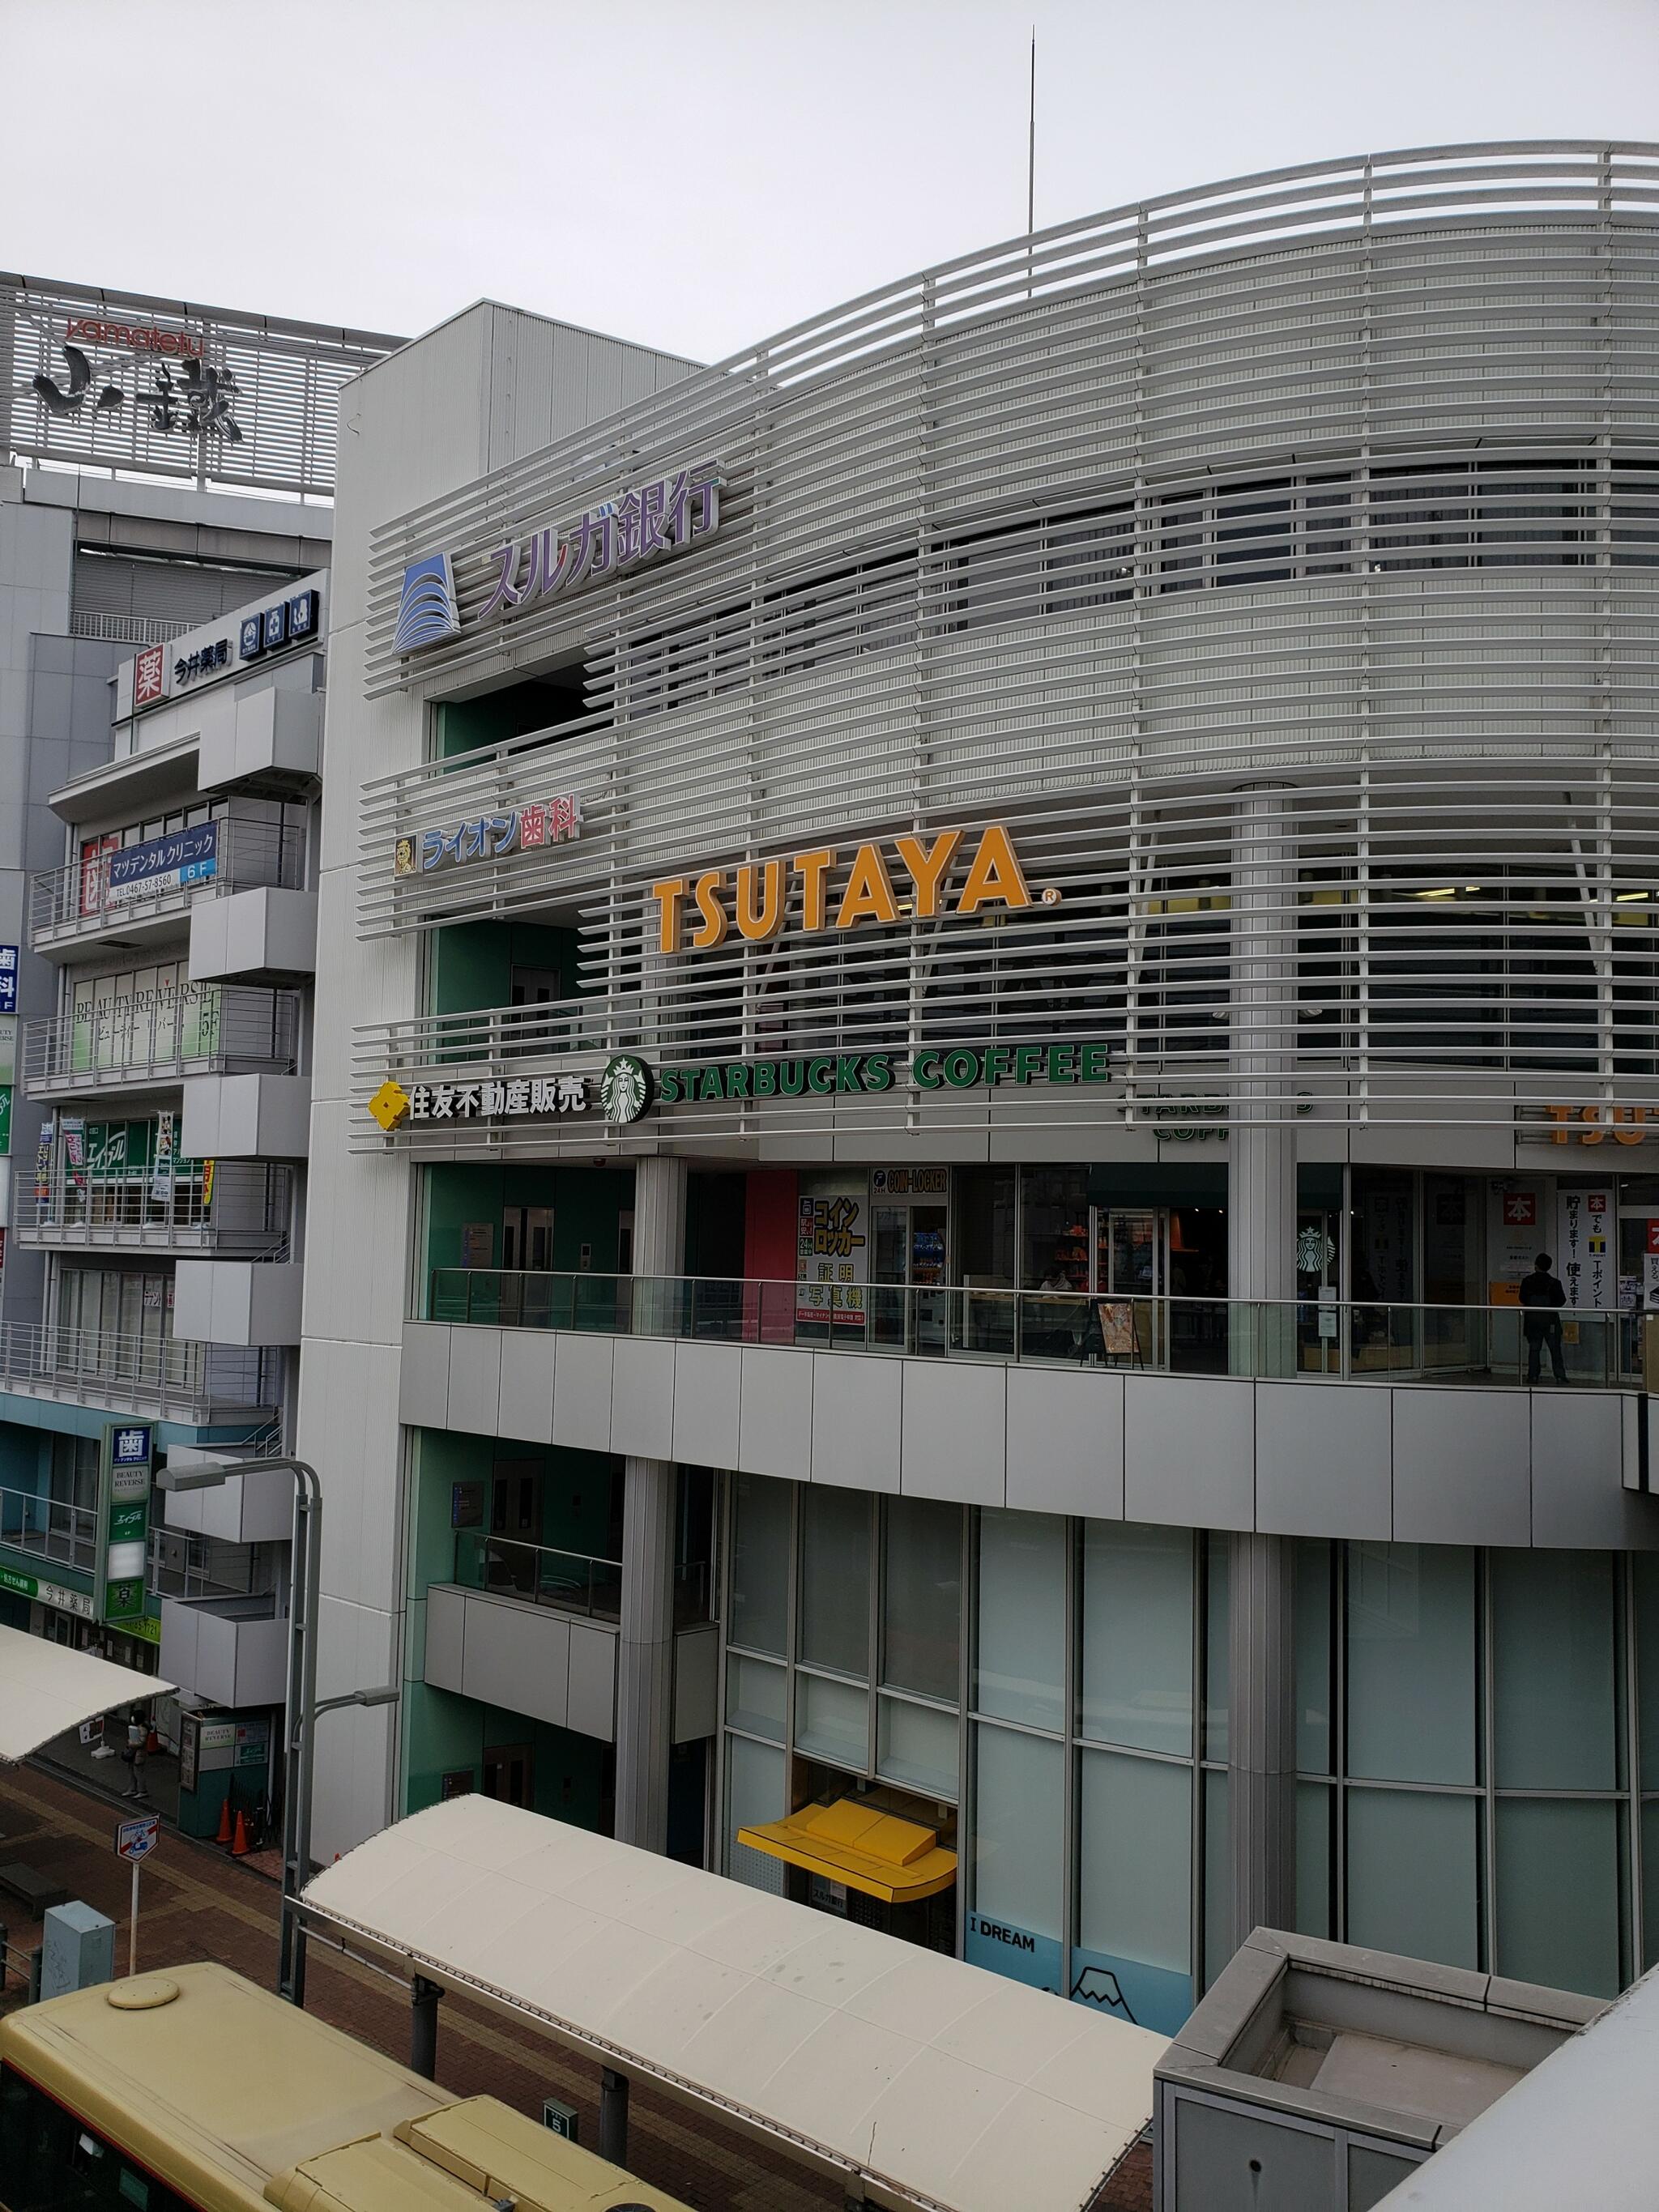 TSUTAYA 茅ヶ崎駅前店の代表写真1